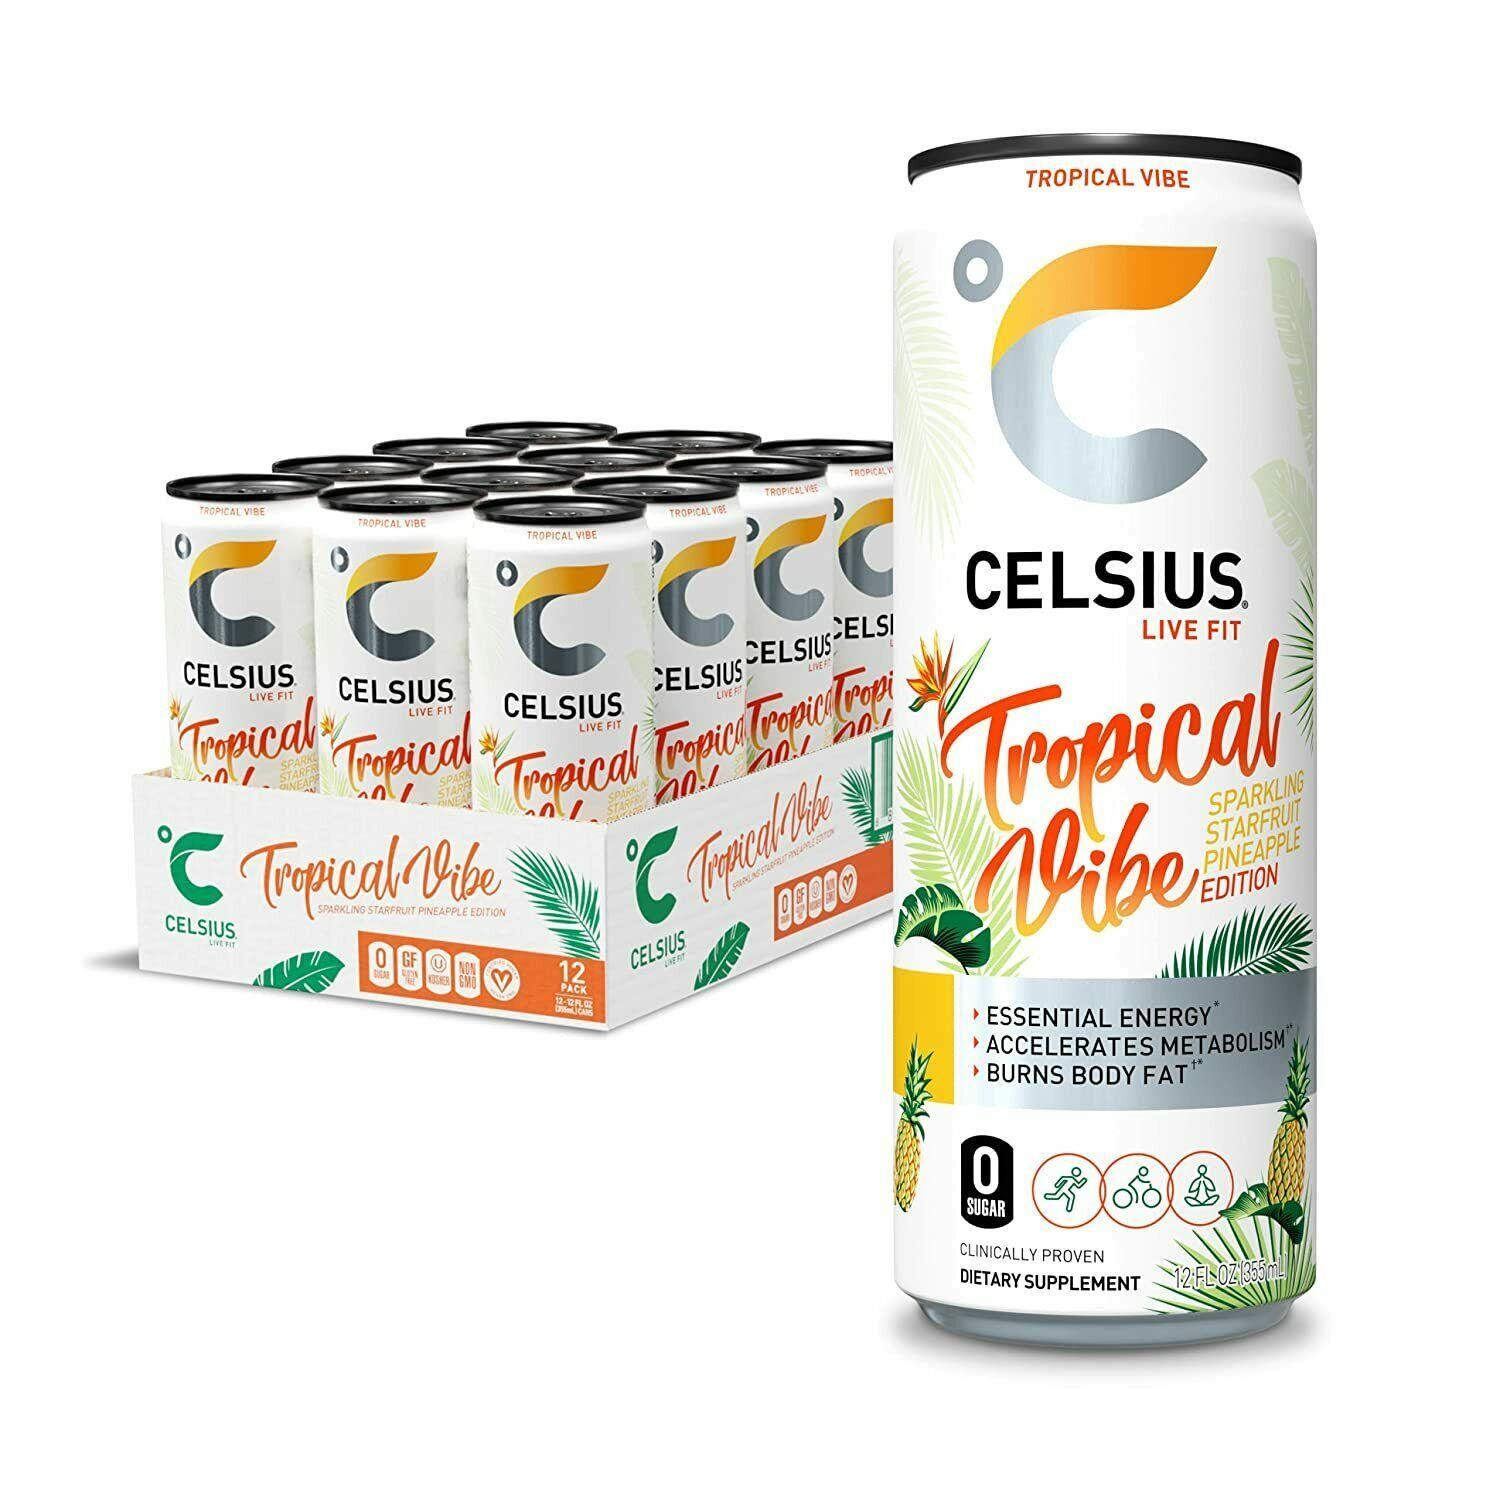 Celsius Live Fit Energy Drink, Tropical Vibe, 12 Oz